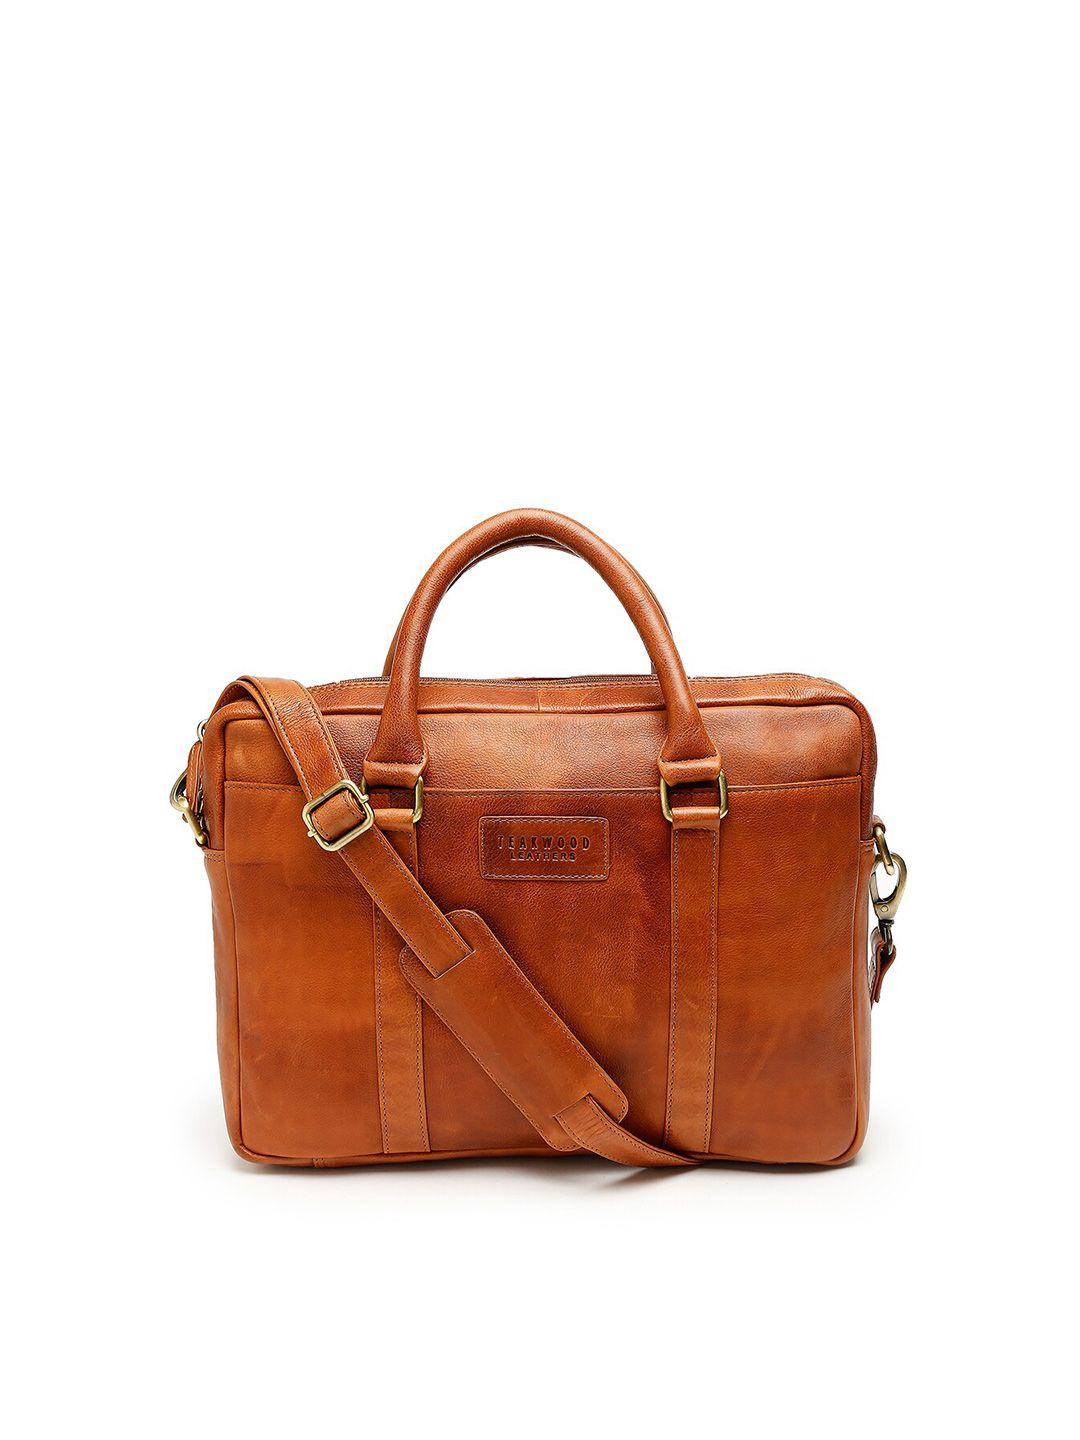 teakwood leathers unisex tan leather laptop bag with detachable strap